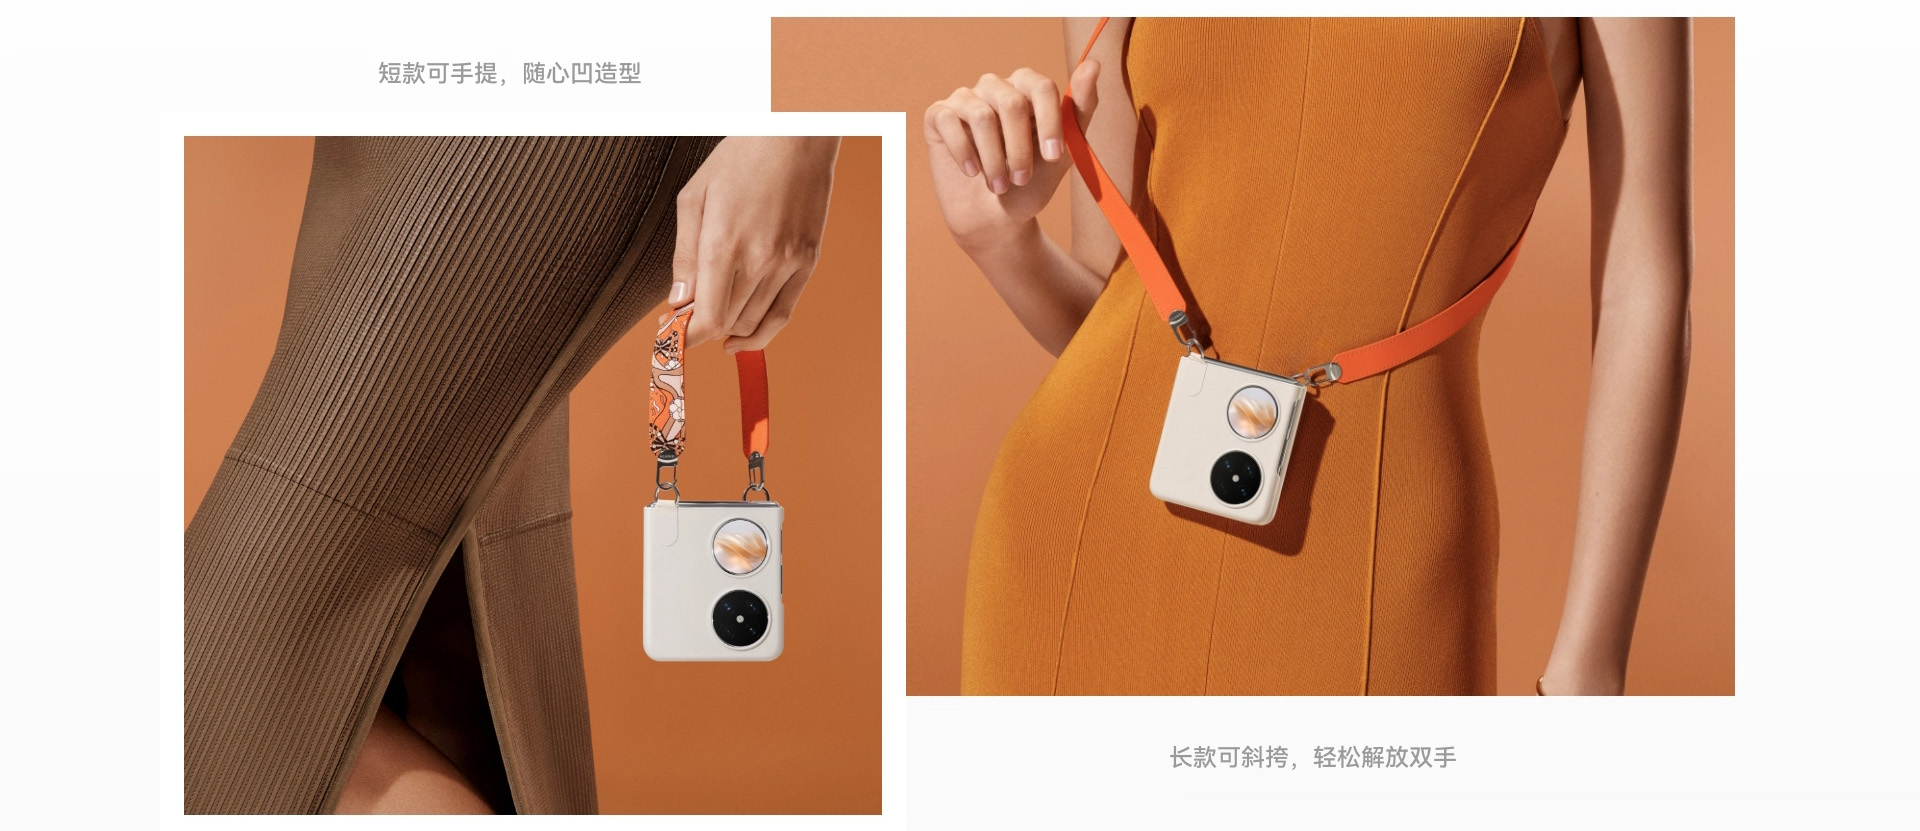 Huawei Pocket 2 Fashion Case